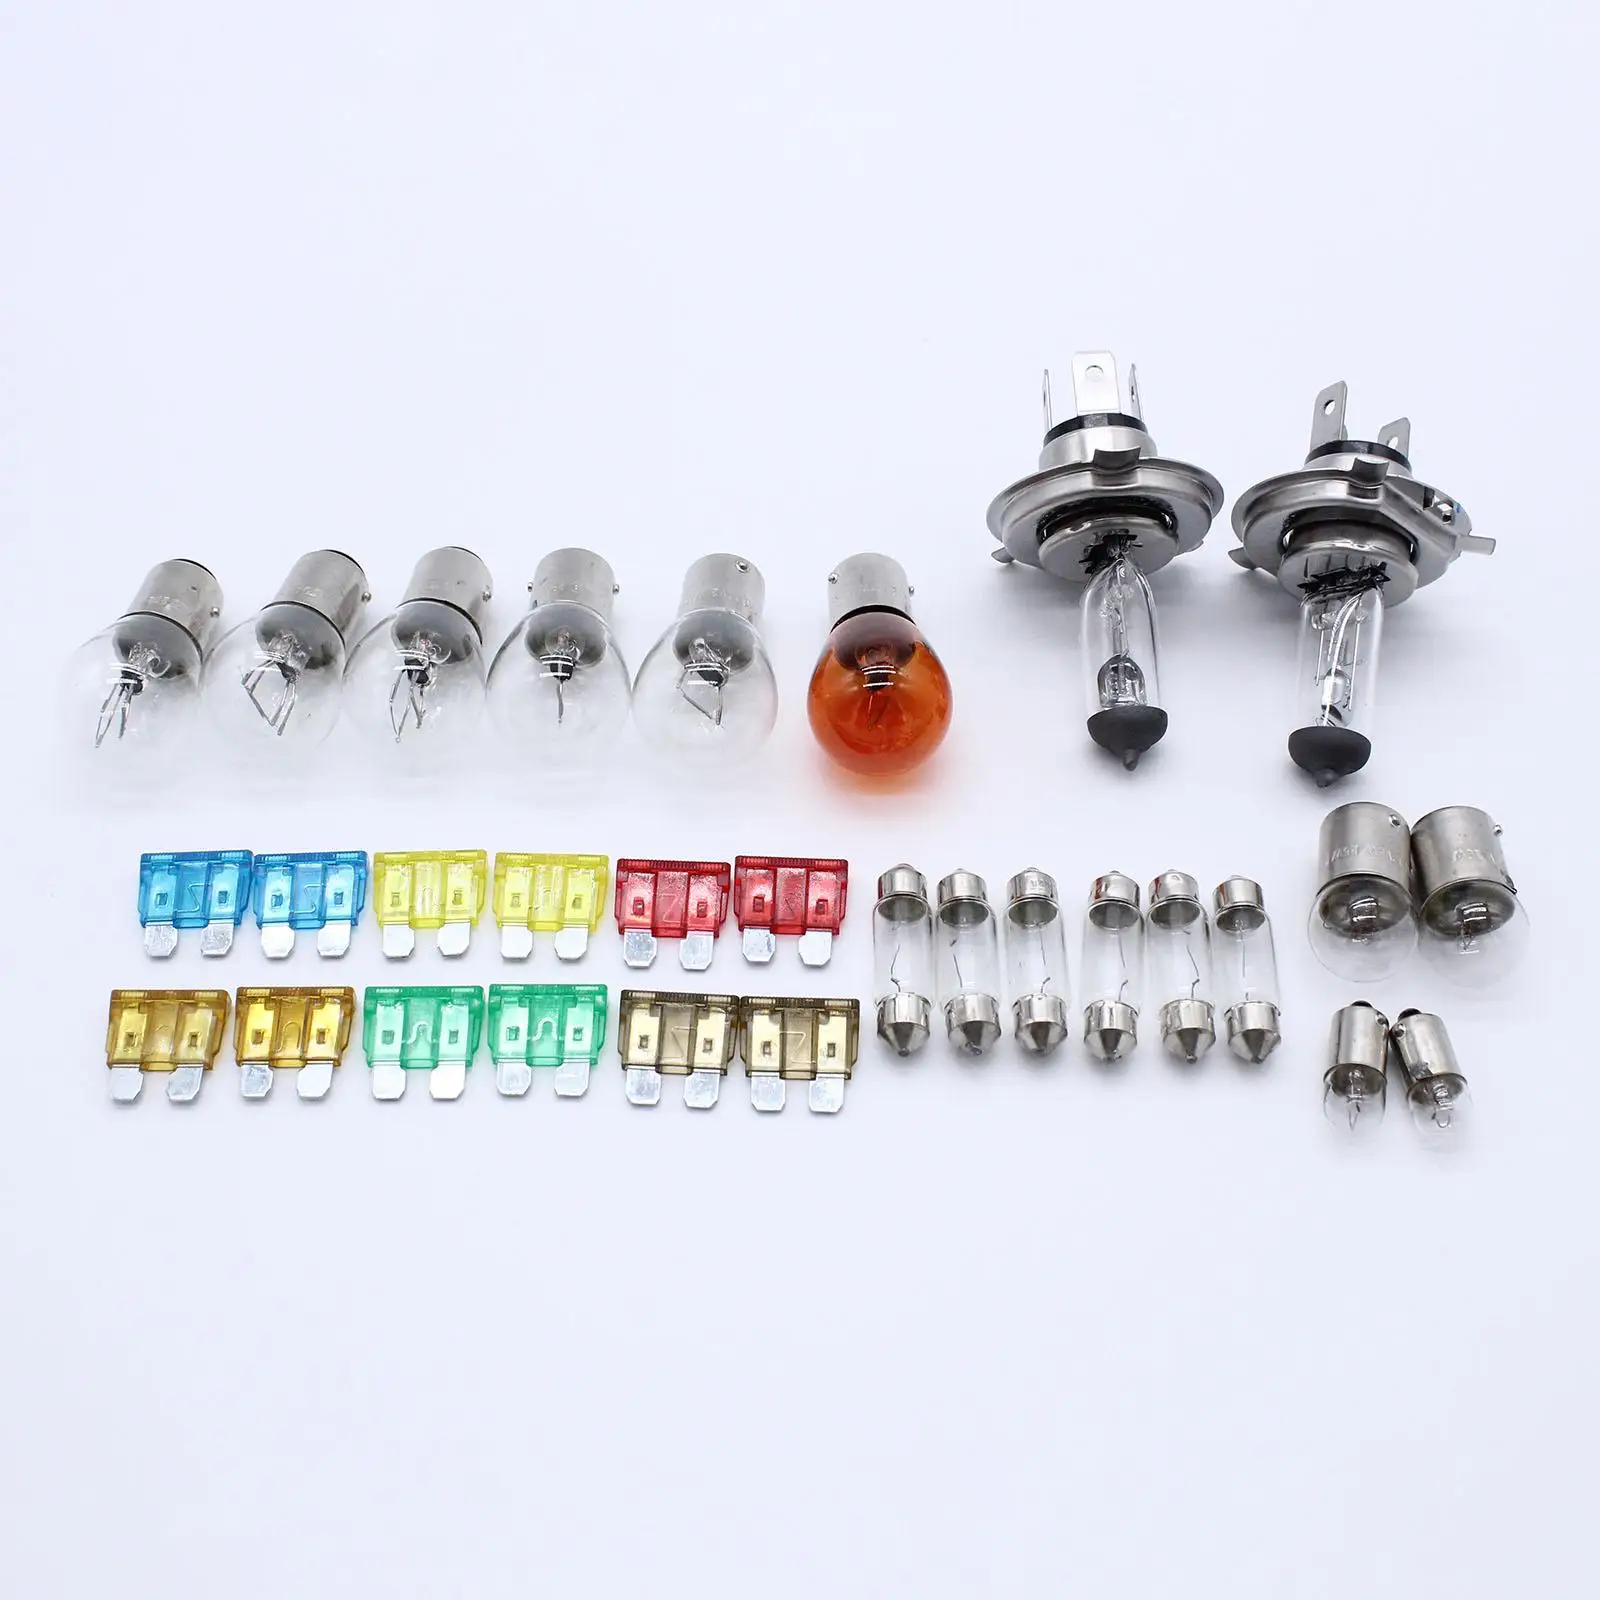 30 Pieces H4 Light Bulb Kit Set Spares Parts Super Bright Fit for Driving